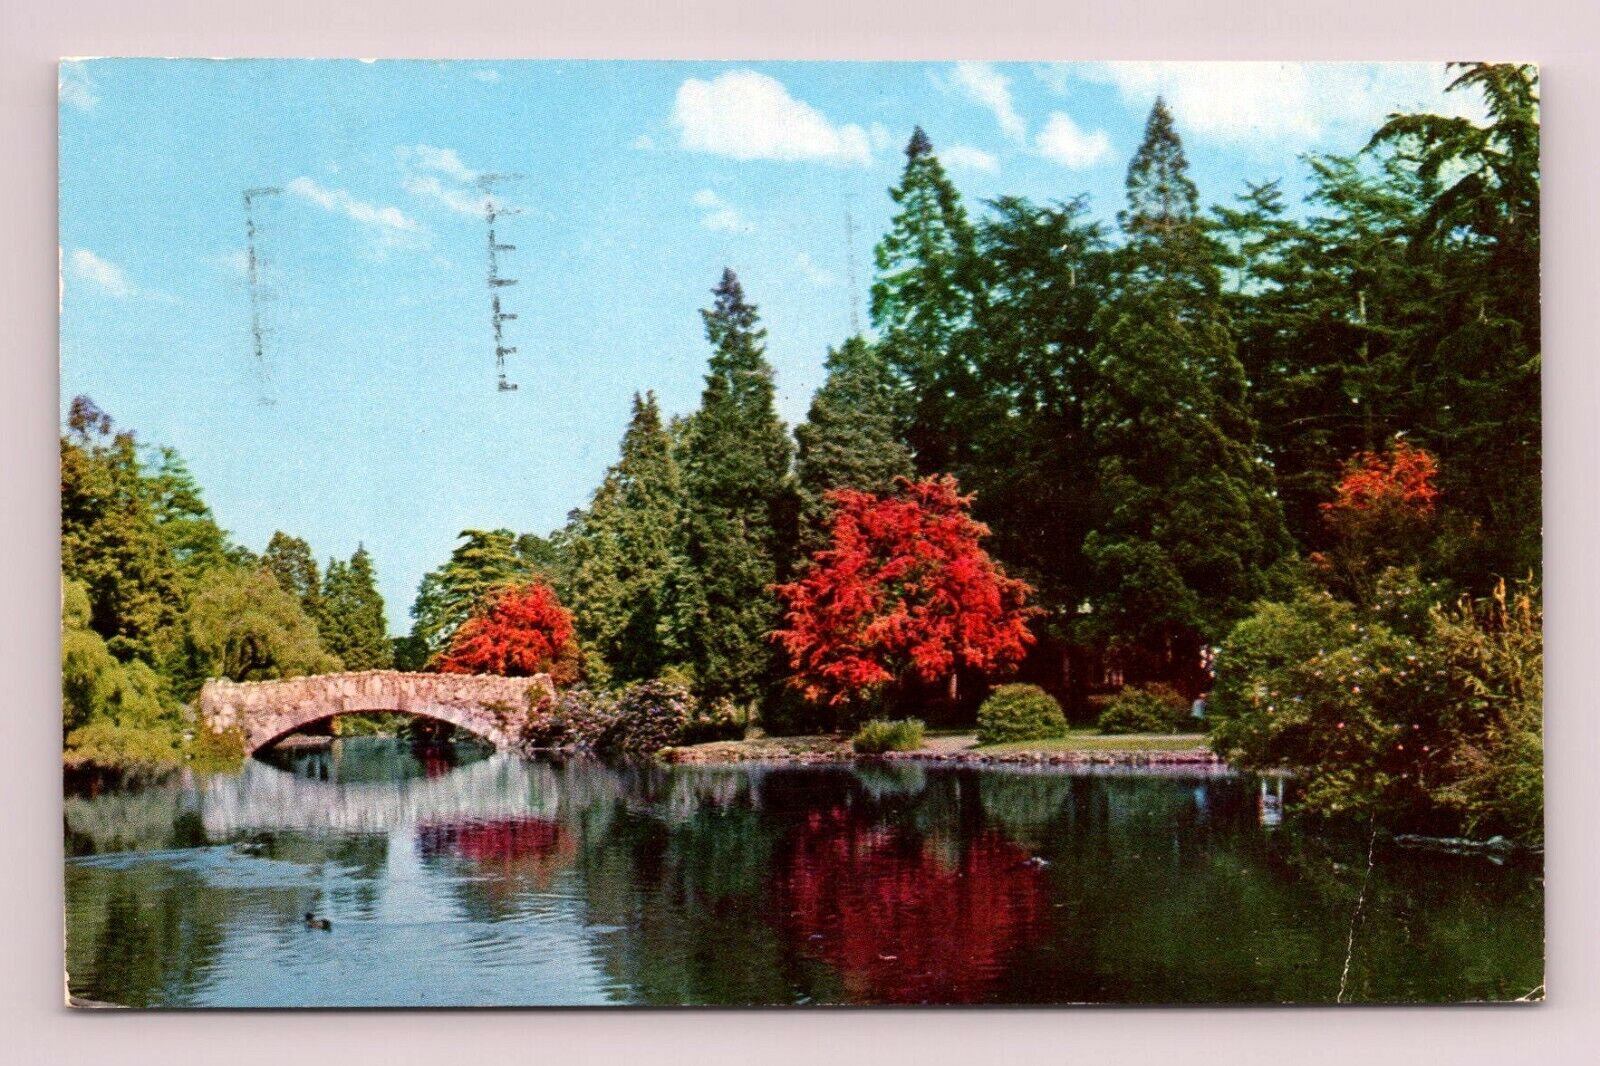 Goodacre Lake Bridge Beacon Hill Park Victoria British Columbia 1950s postcard